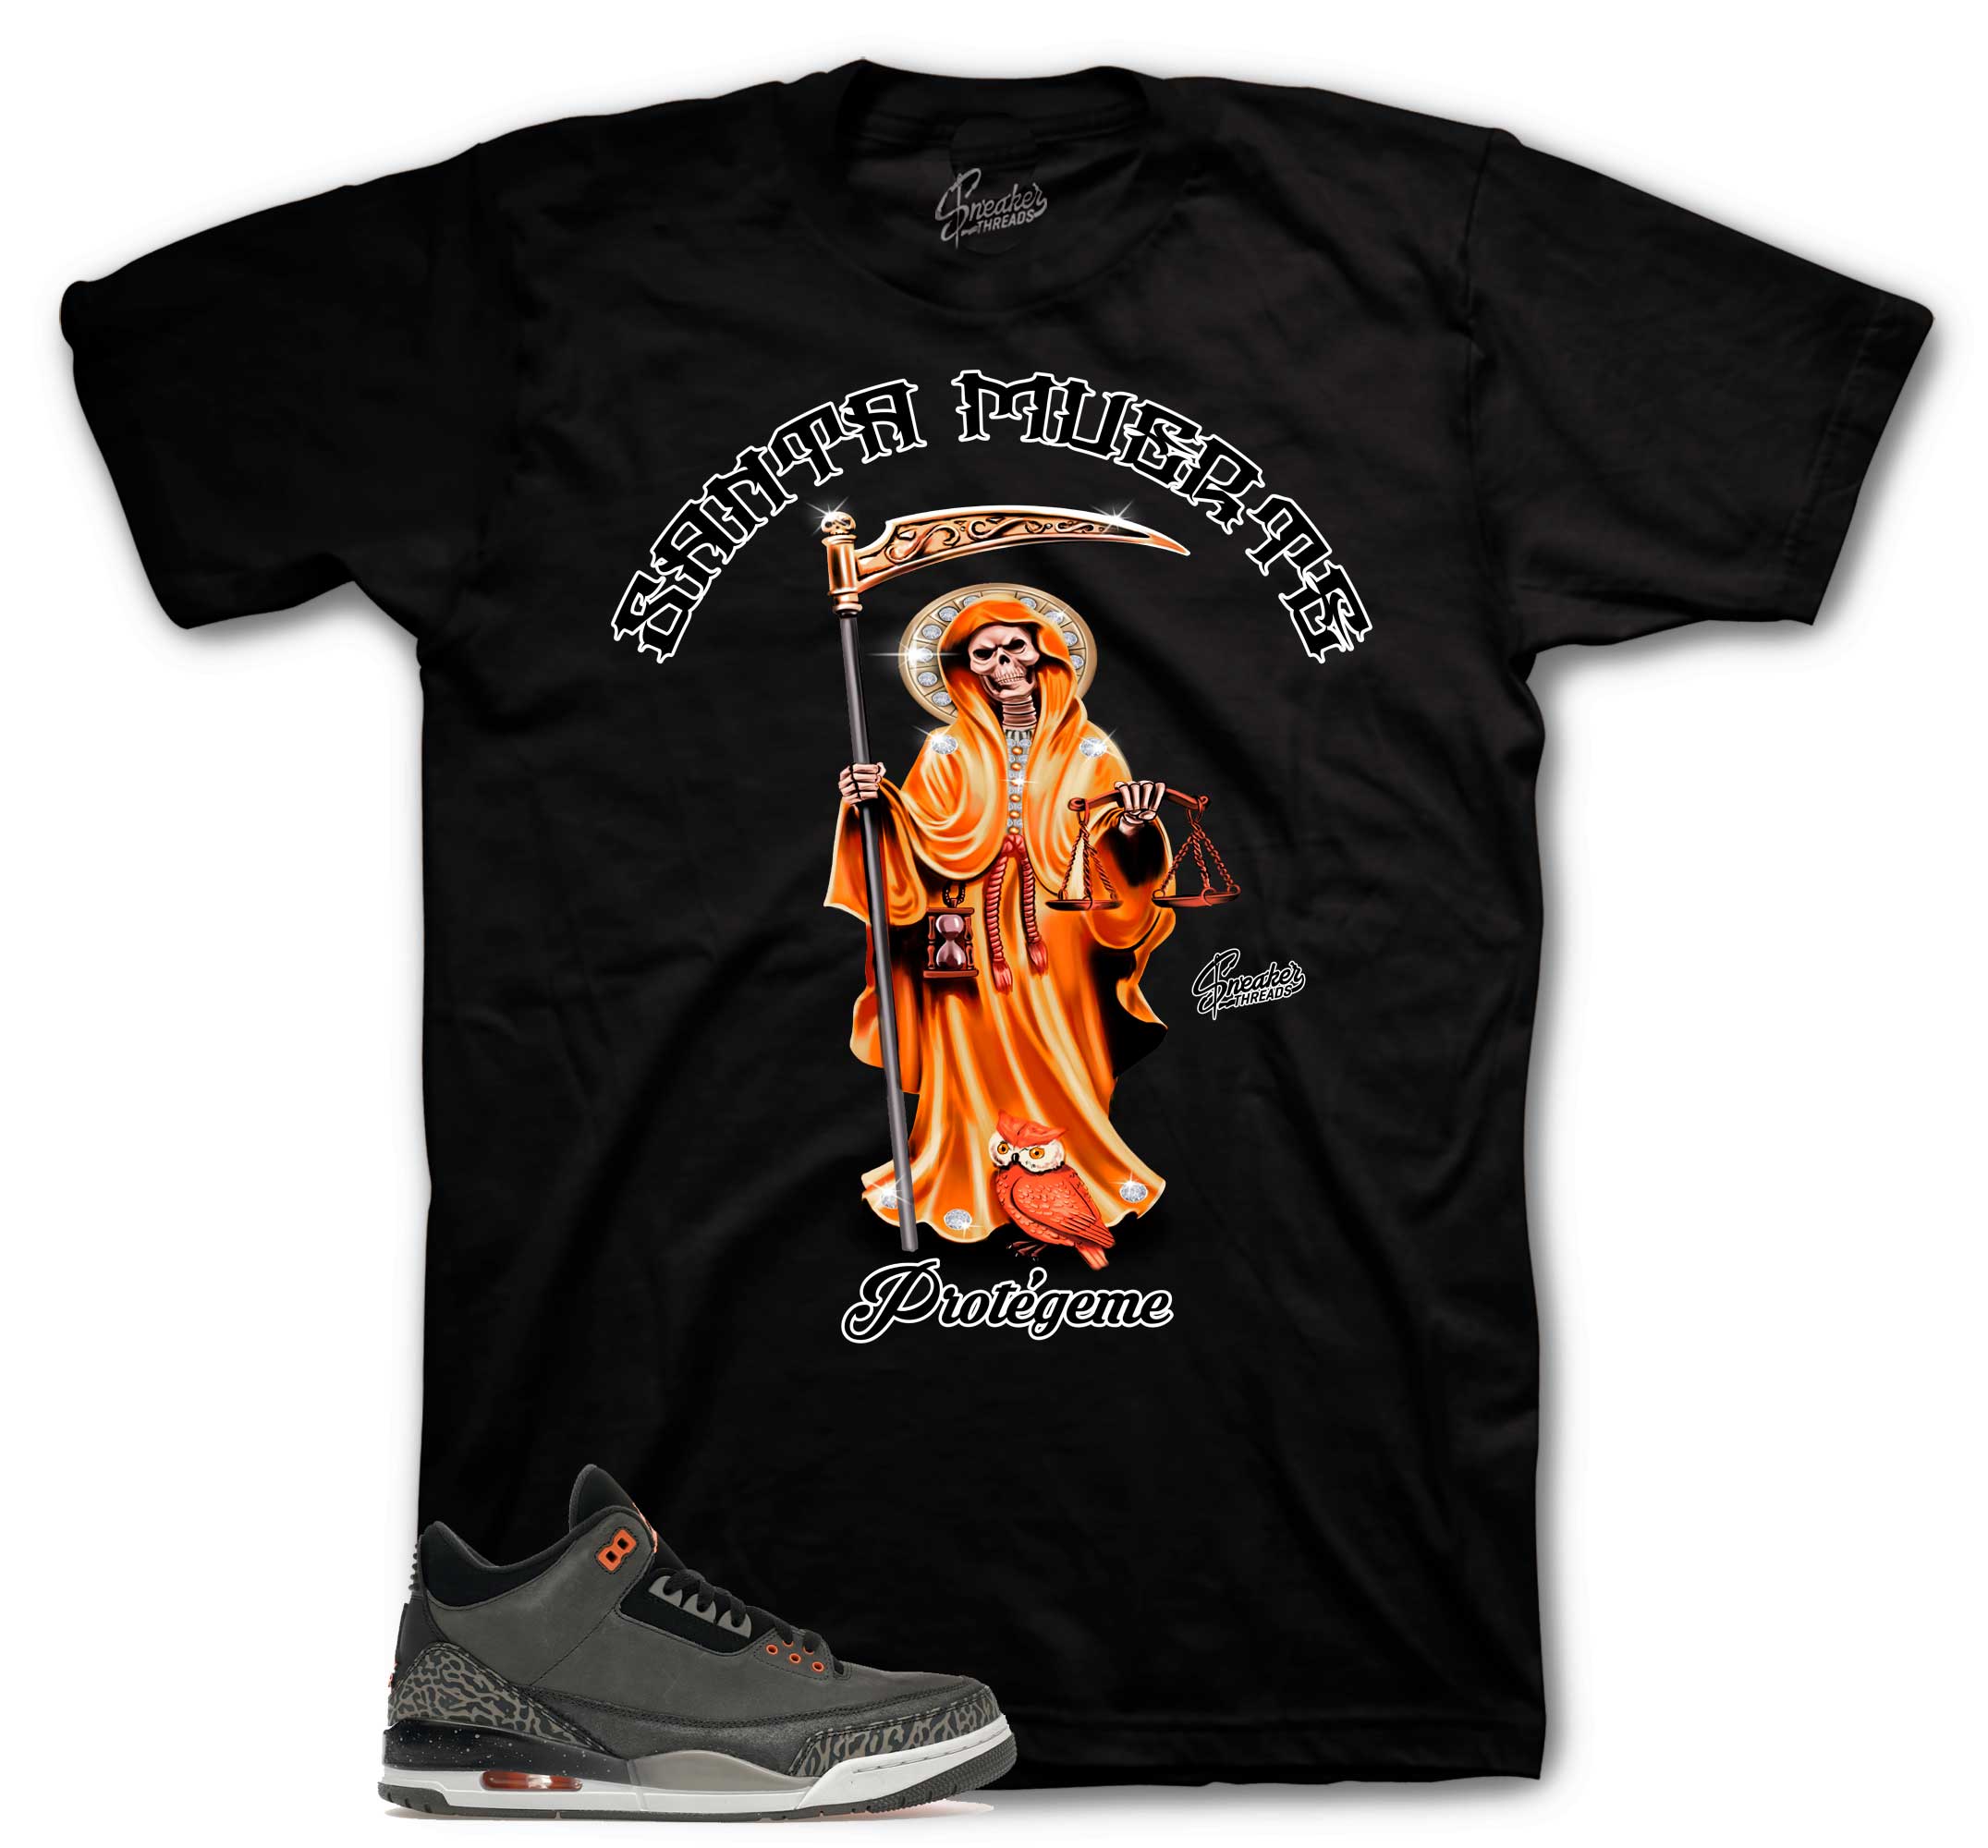 Retro 3 Fear Shirt - Santa Muerte - Black